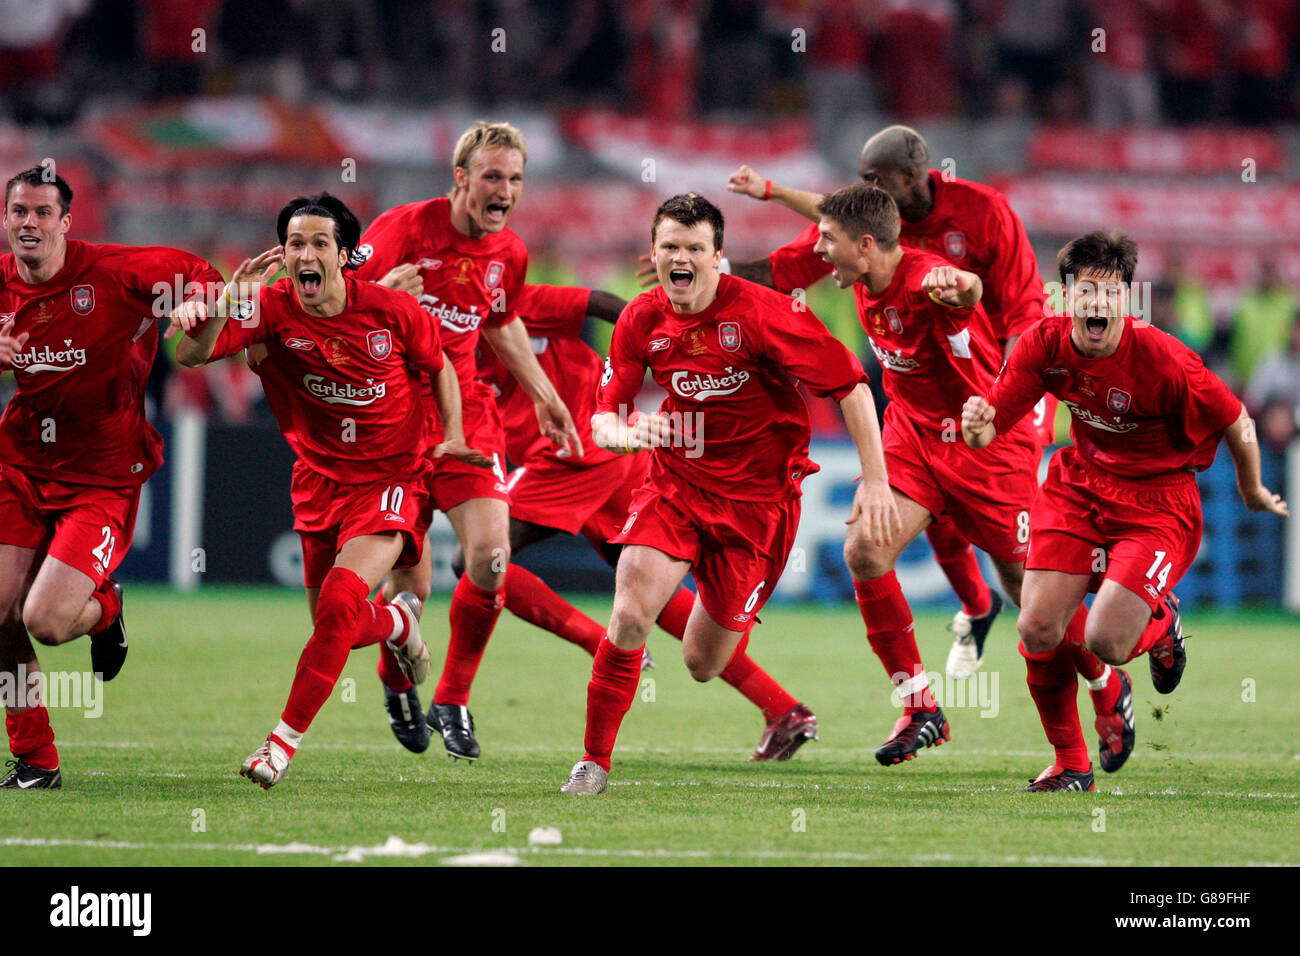 Soccer - UEFA Champions League - Final - AC Milan v Liverpool - Ataturk  Olympic Stadium. Liverpool players run to